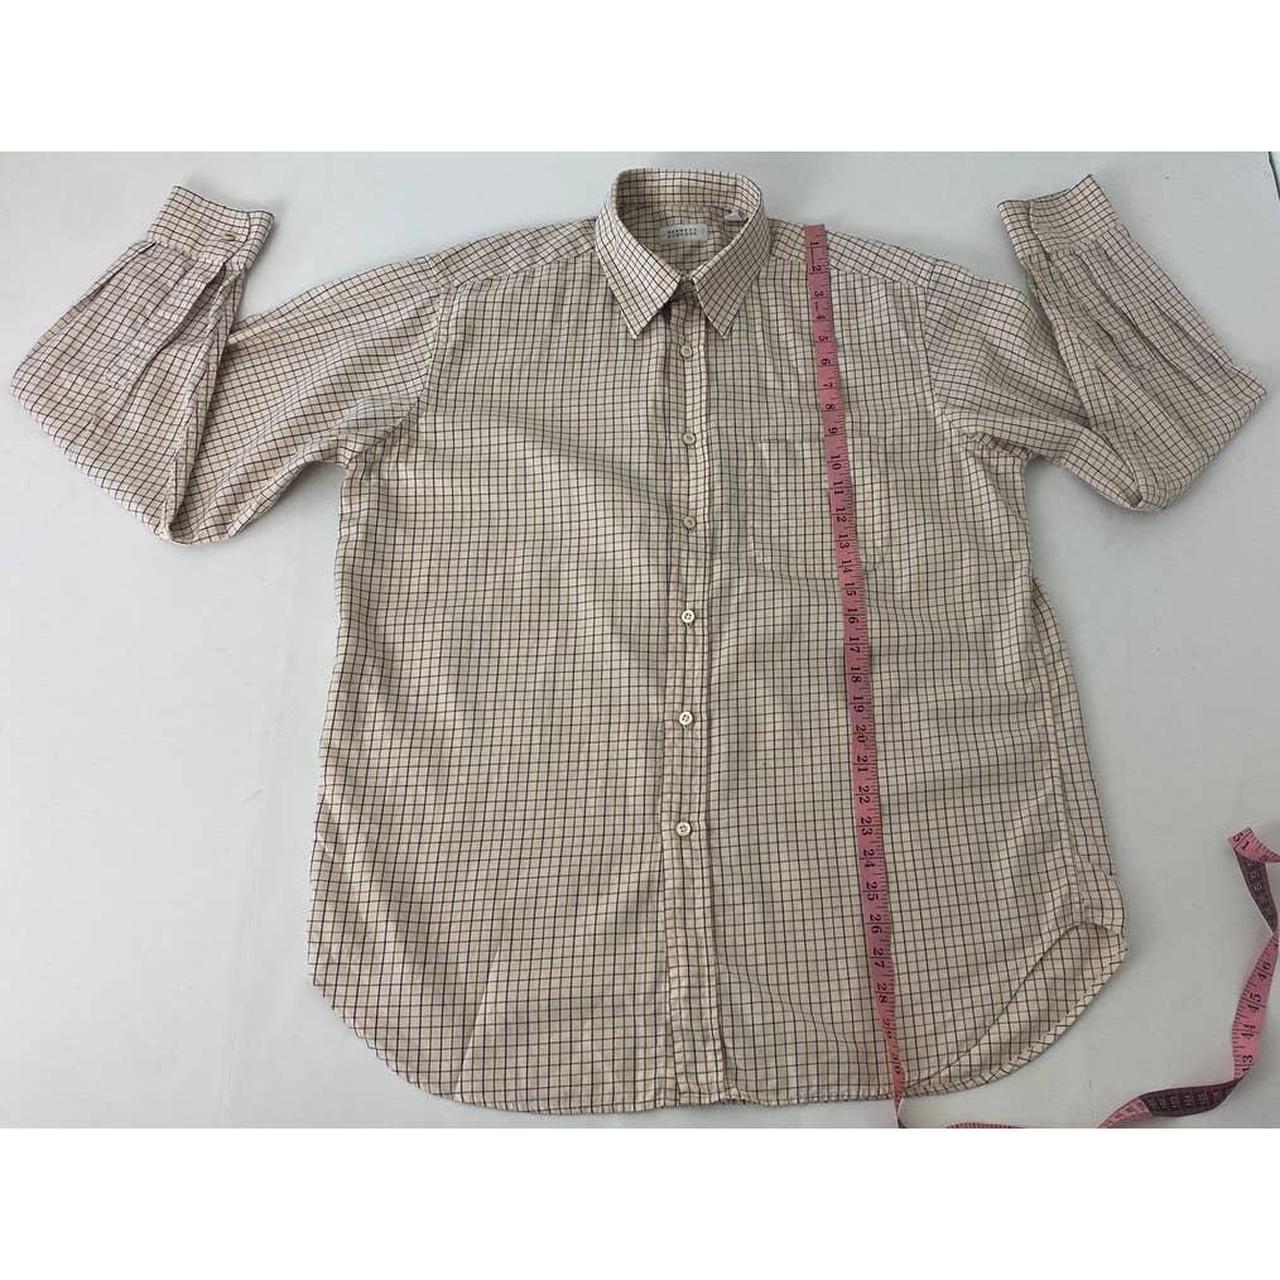 Barney's Men's Tan and Brown Shirt (4)